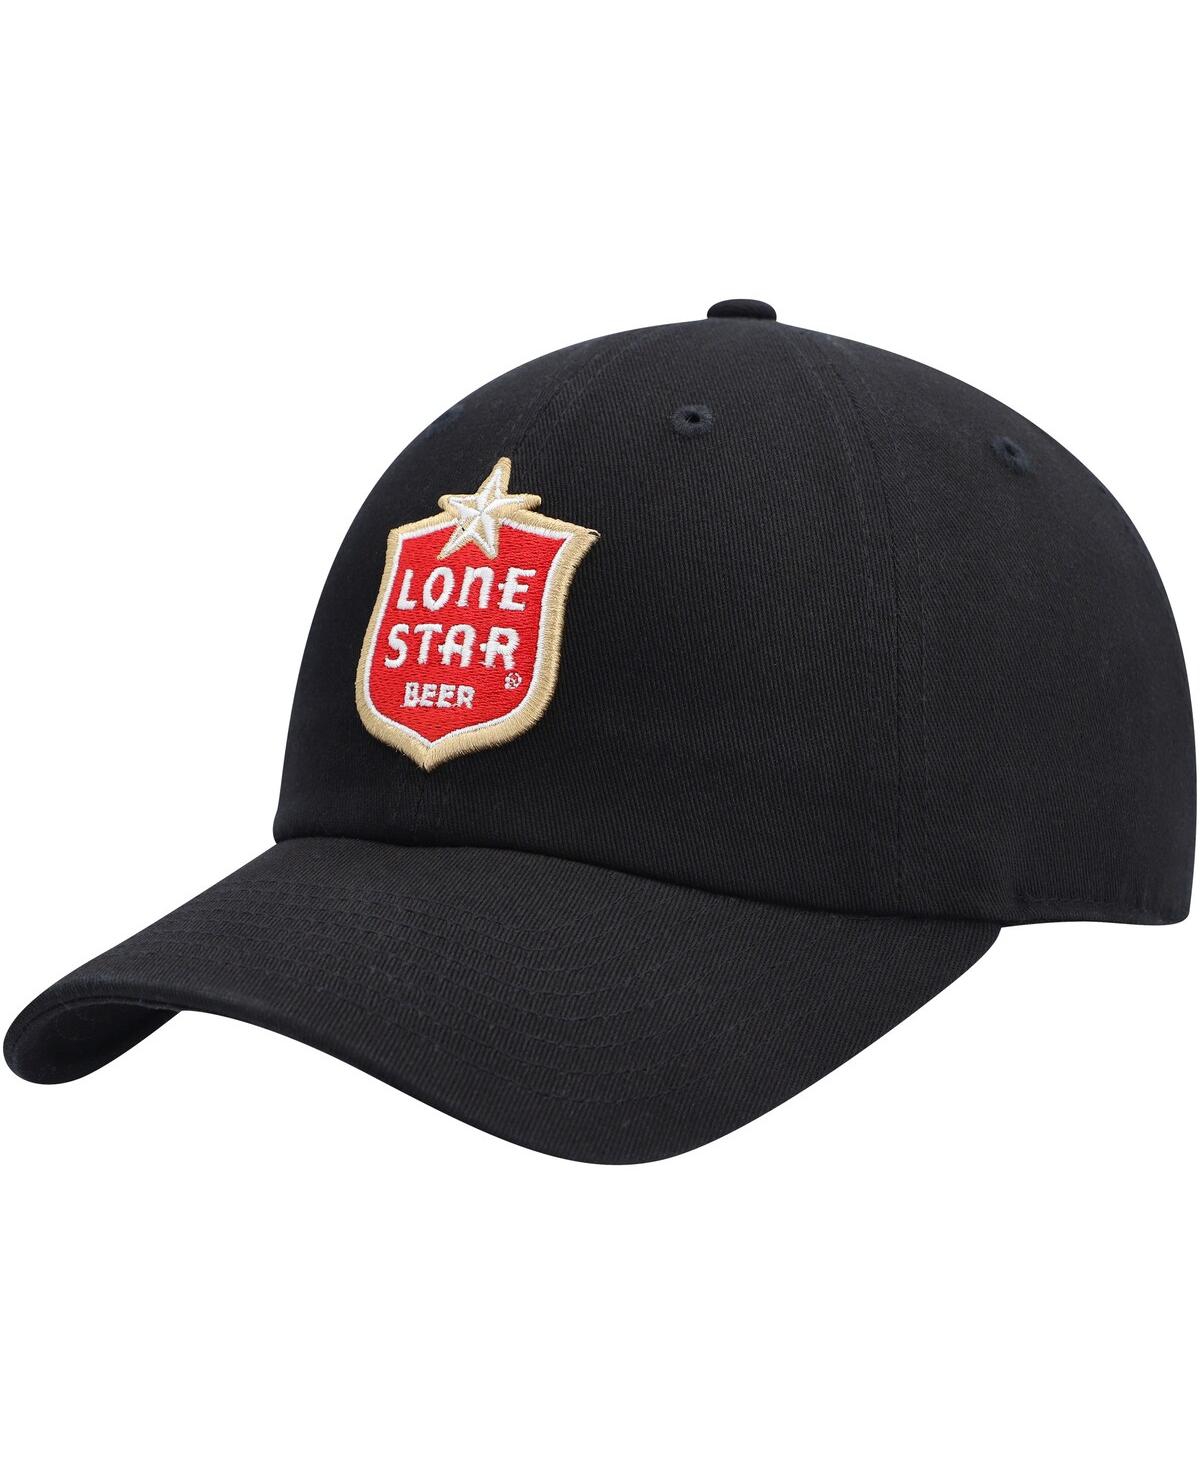 Men's American Needle Black Lone Star Beer Ballpark Adjustable Hat - Black